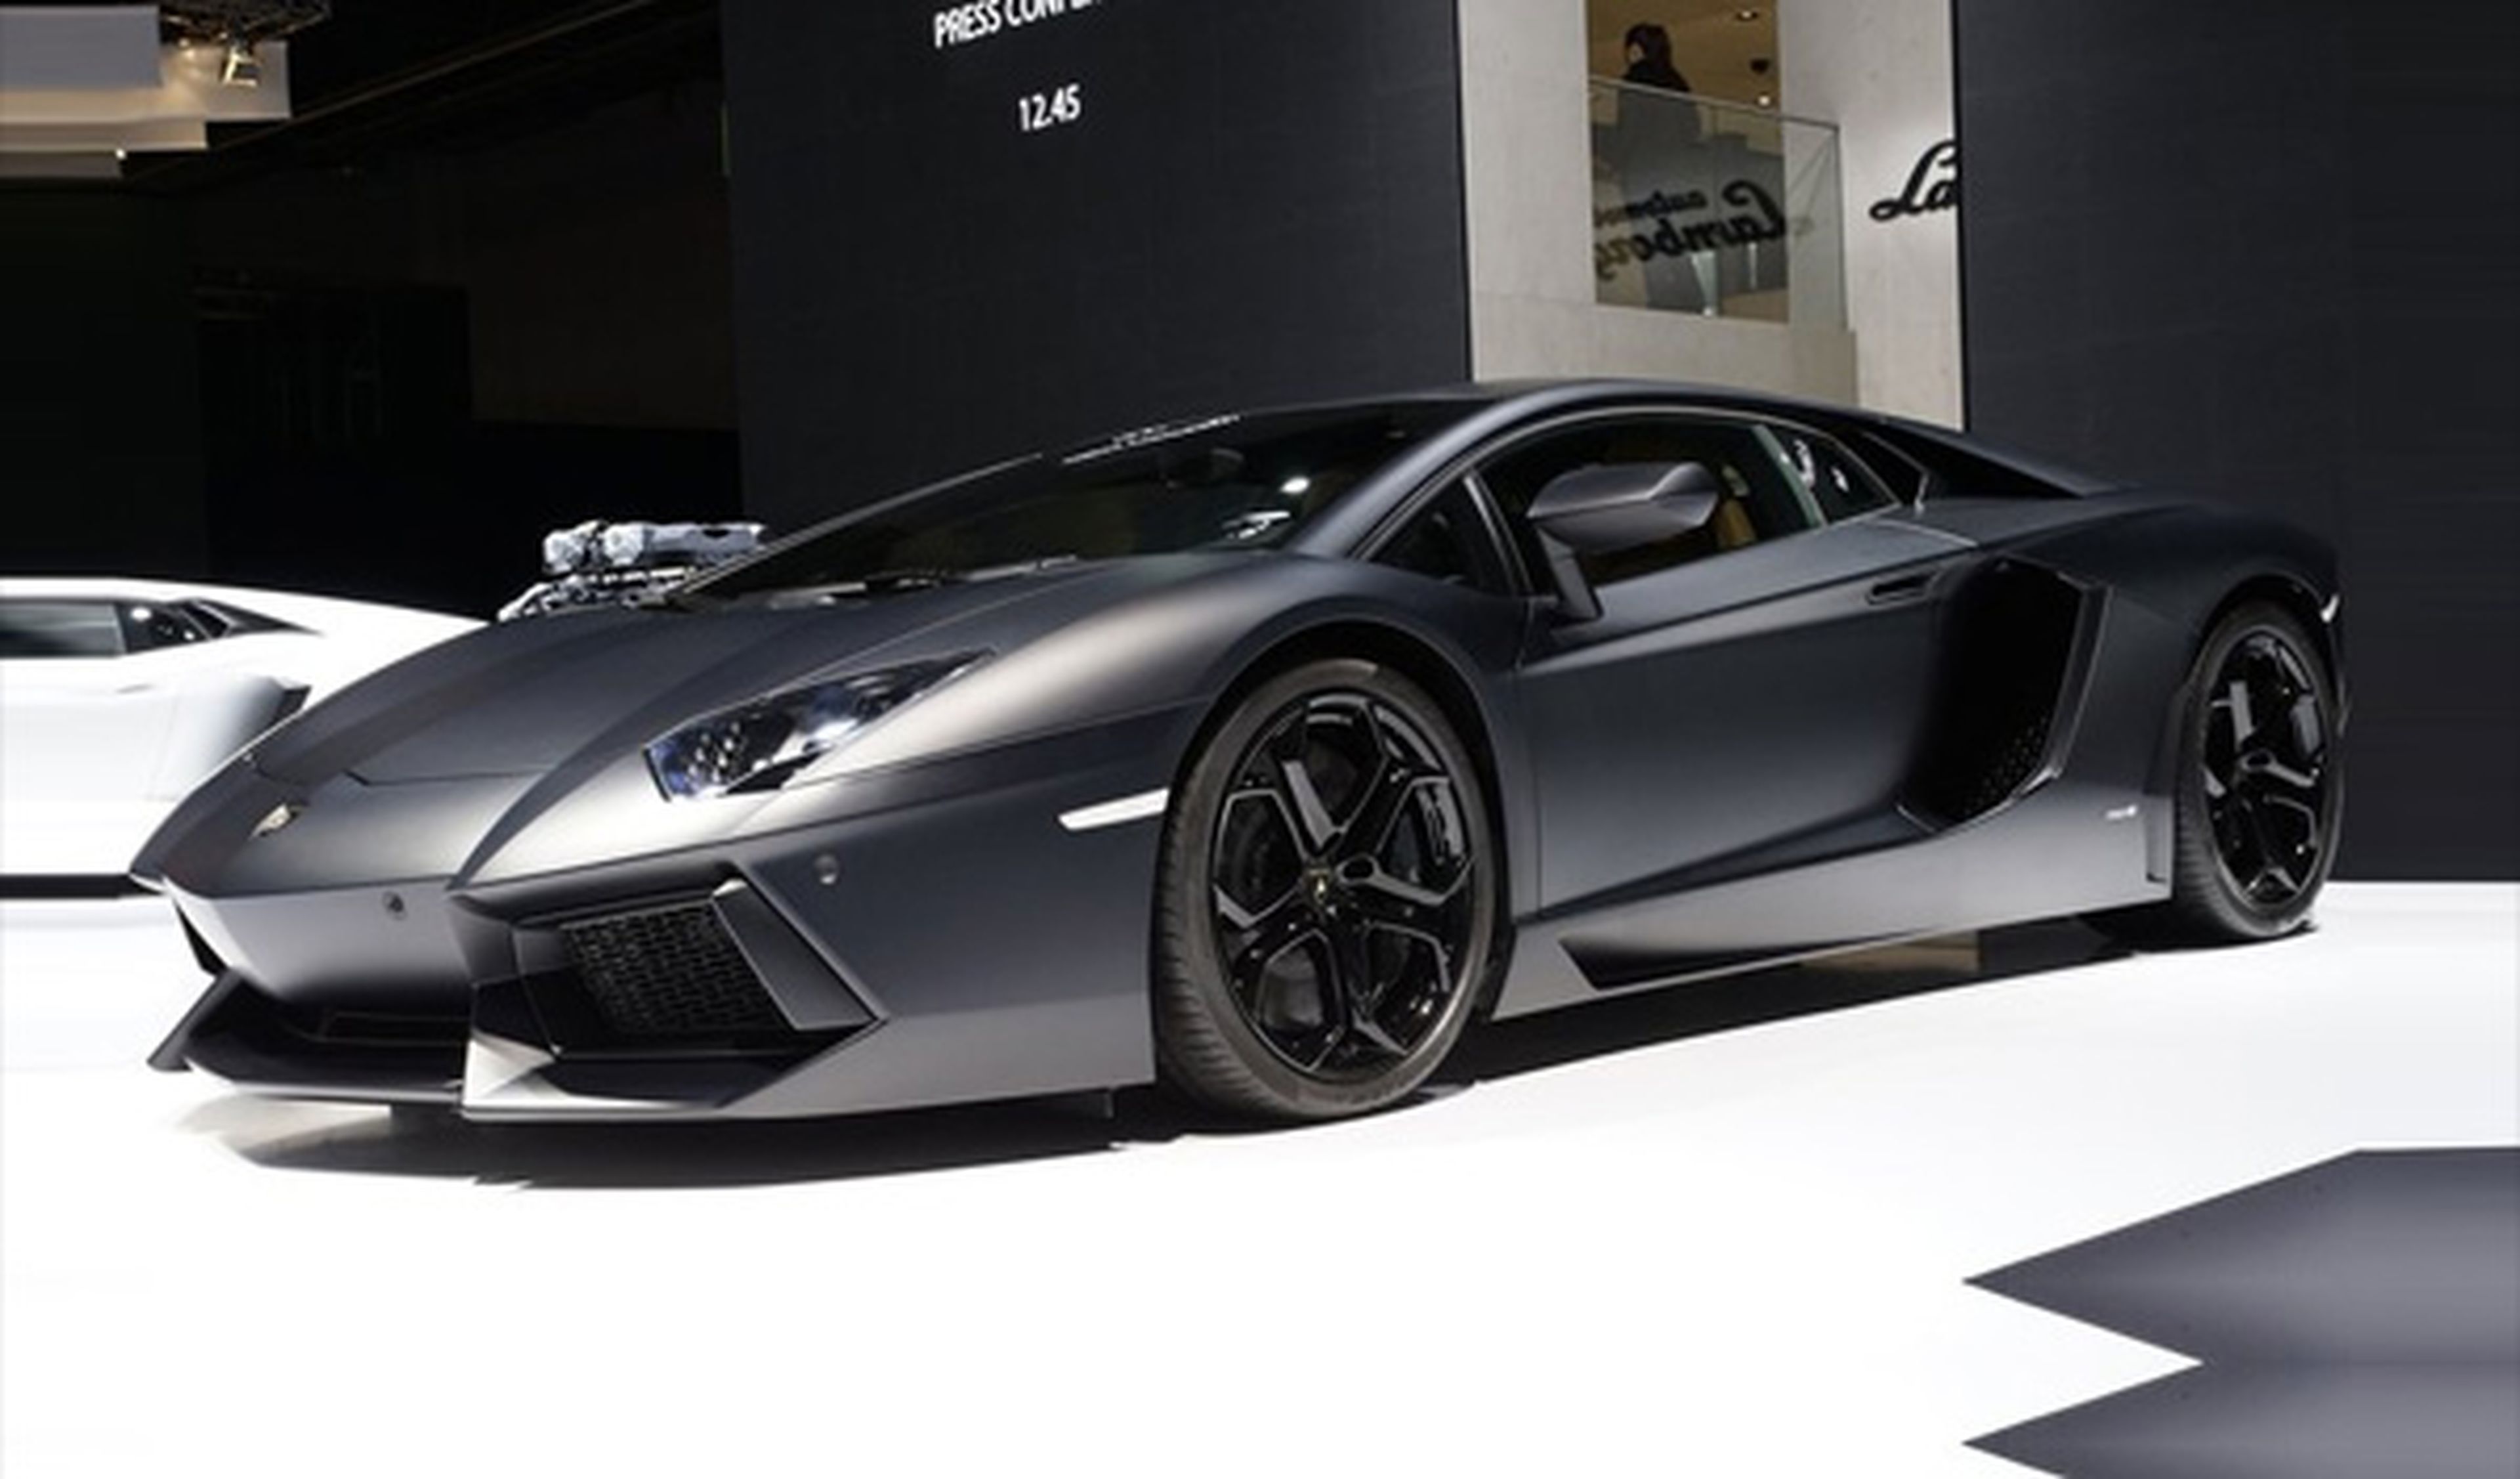 Embargan el Lamborghini Aventador de Tamara Ecclestone